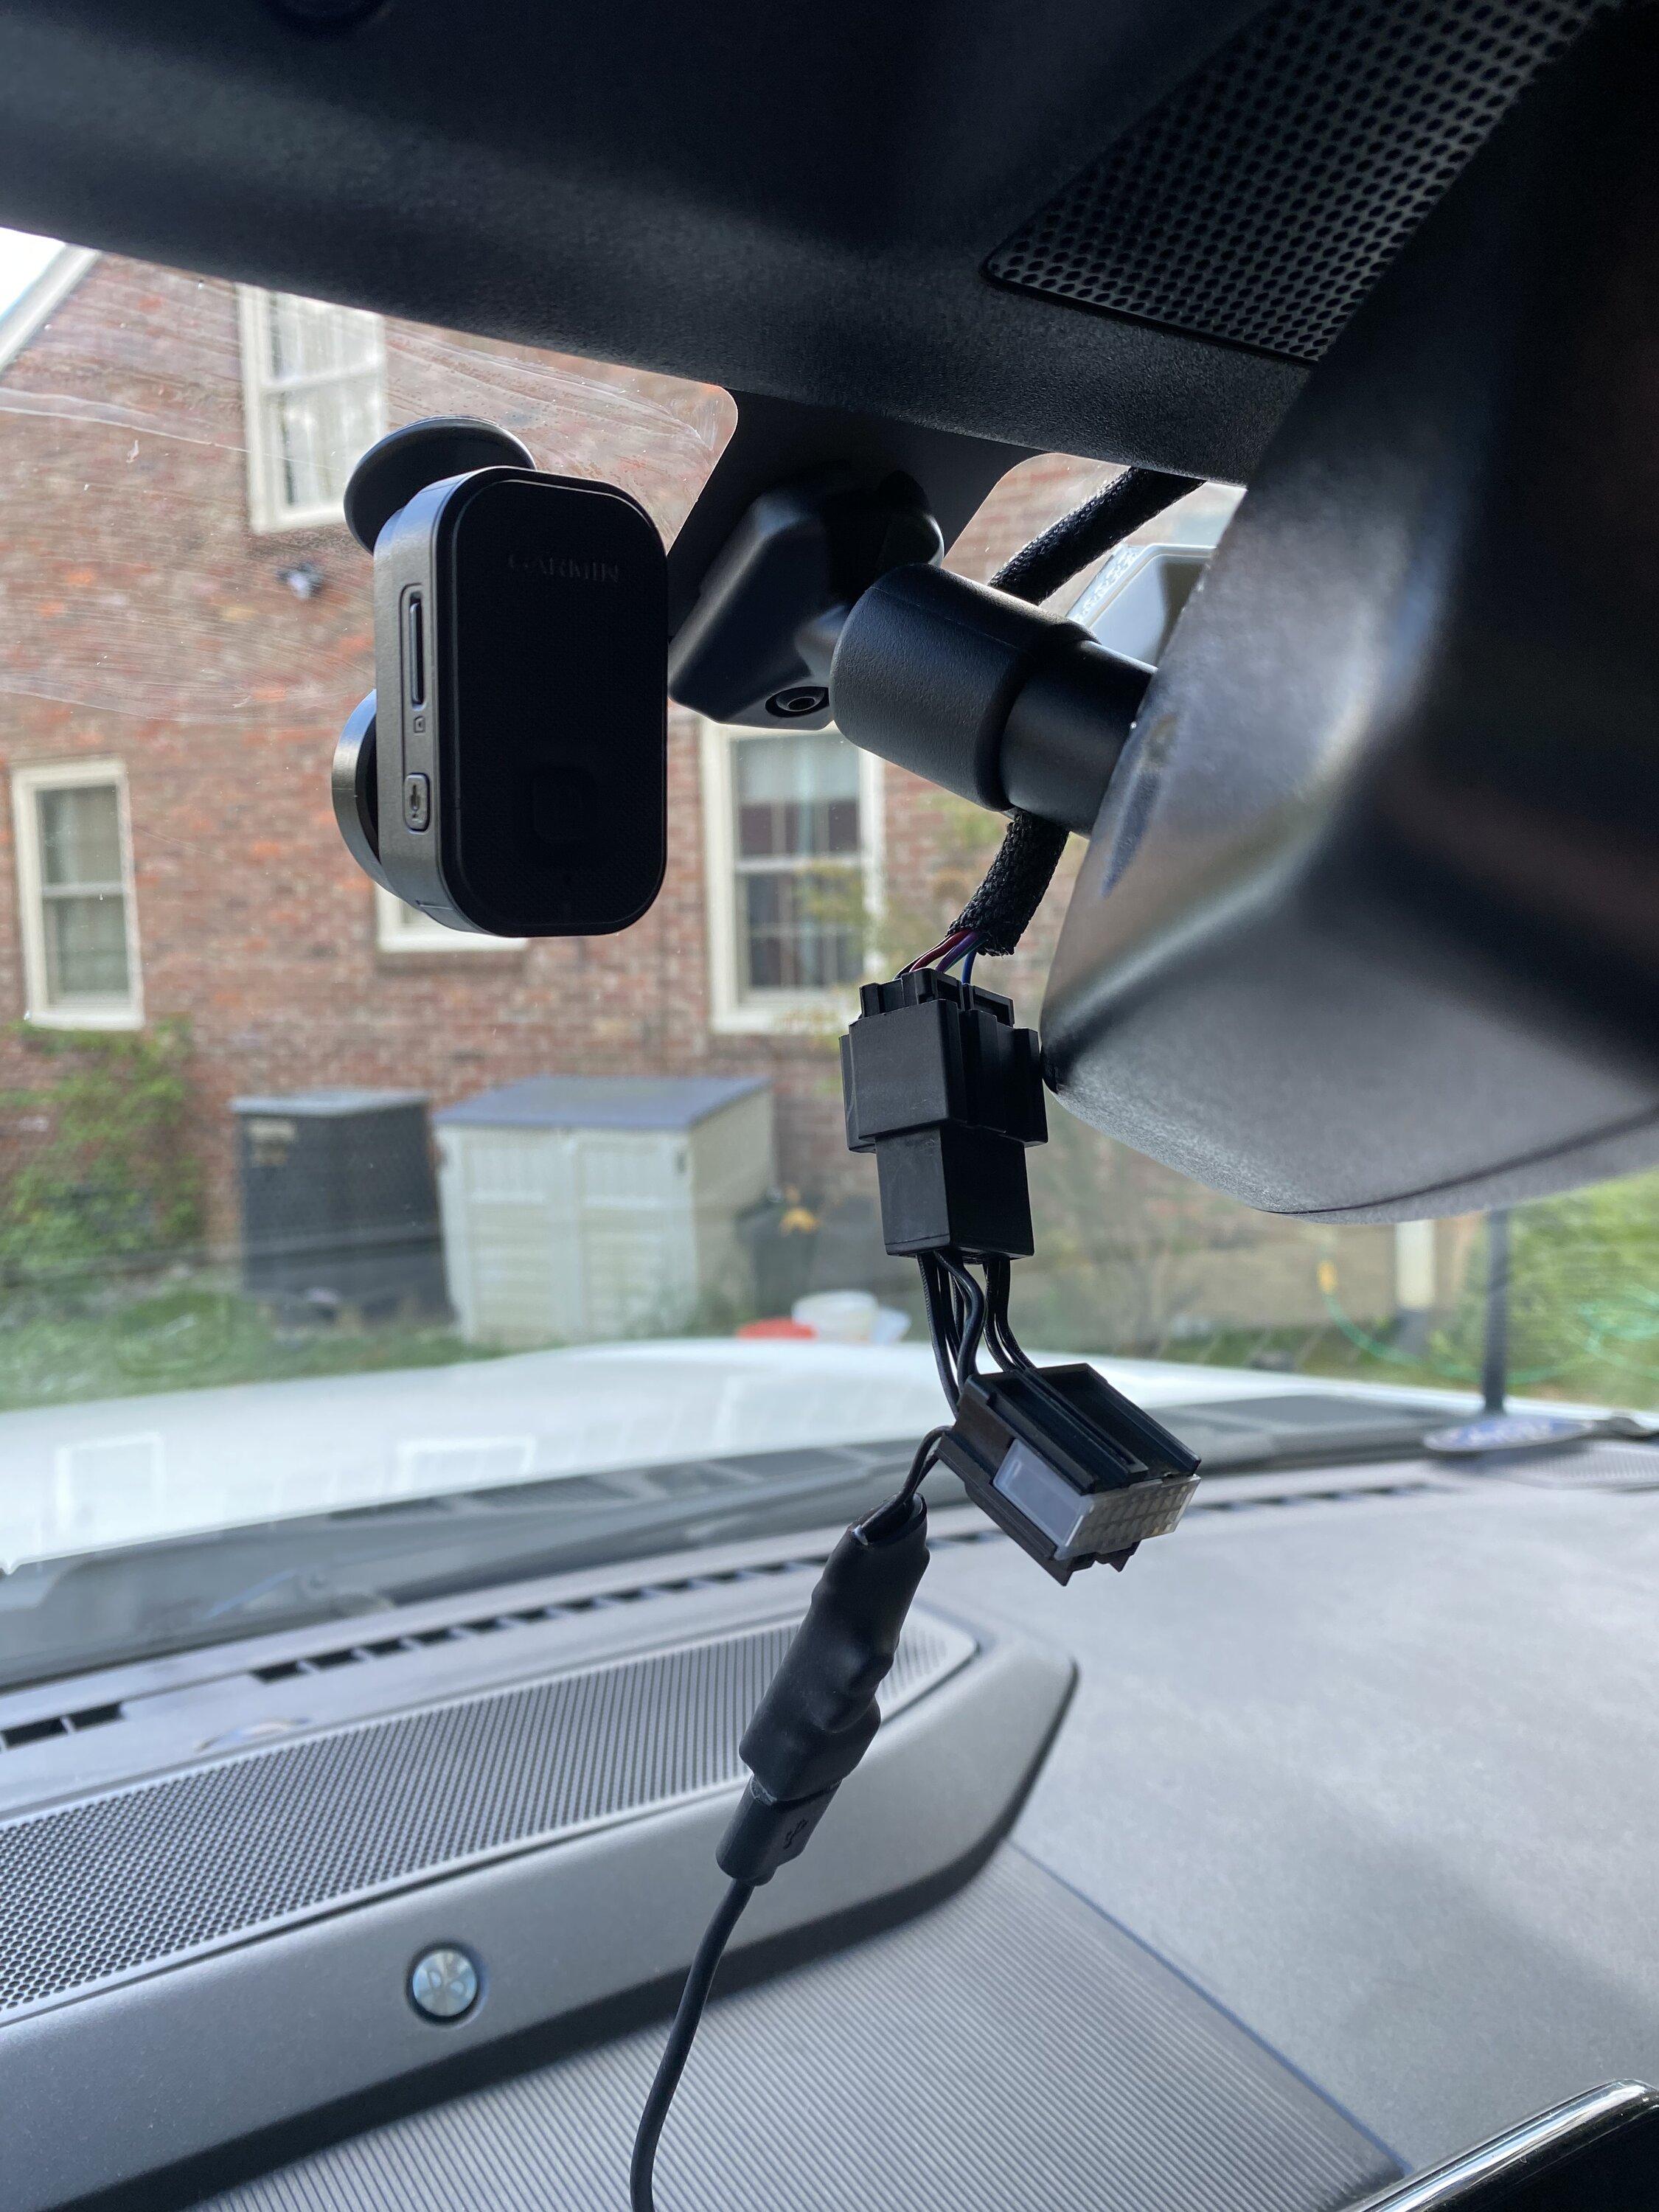 Garmin Mini Dashcam-install/thoughts